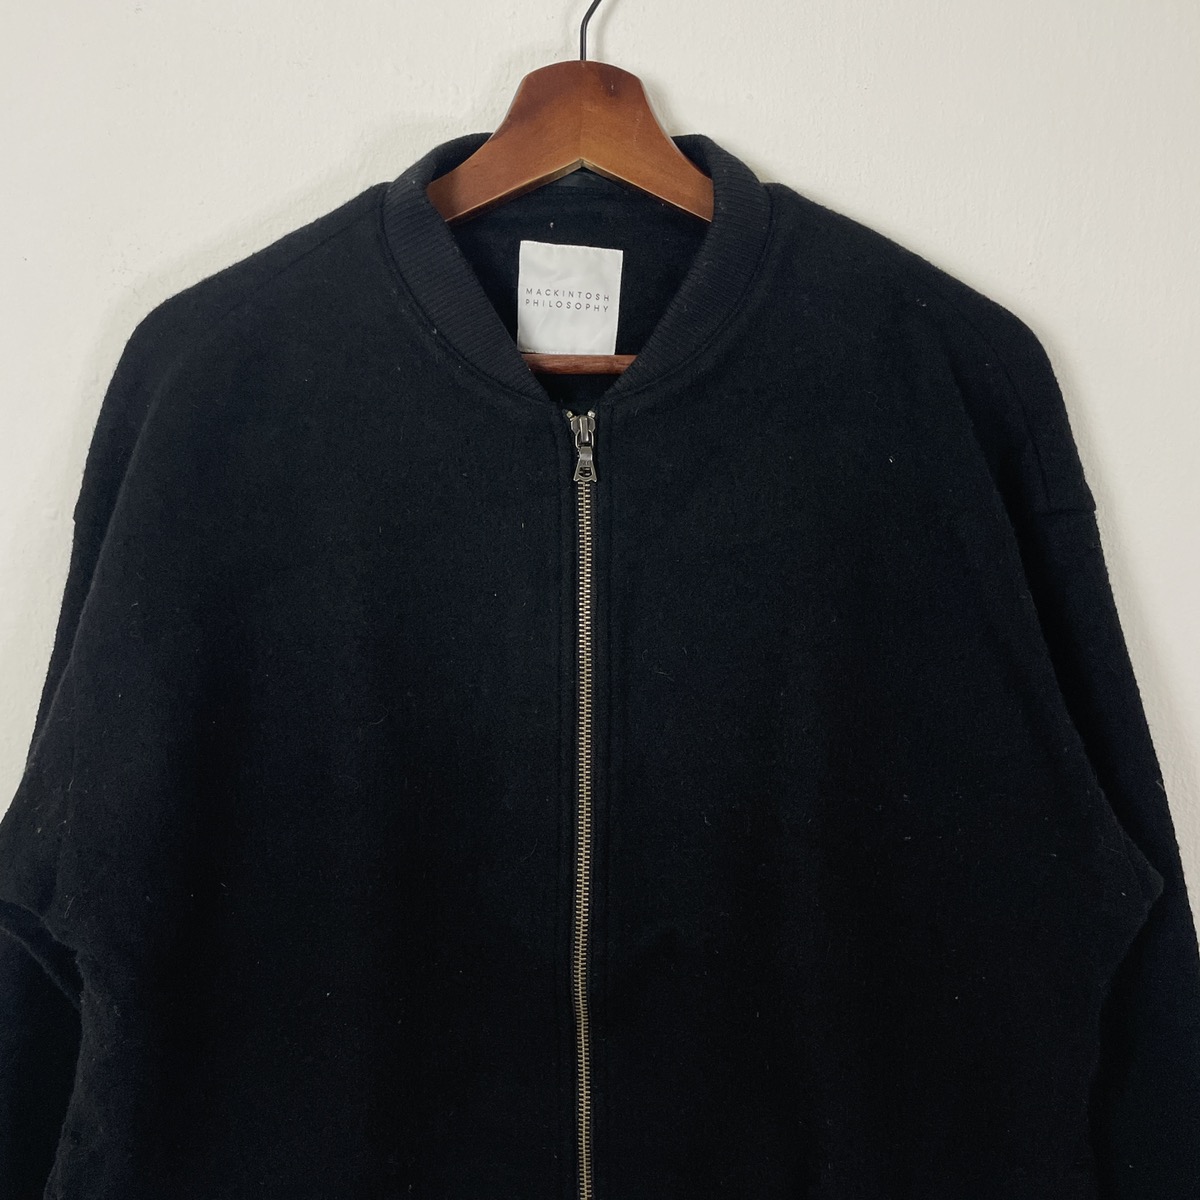 Vintage Mackintosh Philosophy Zipper Ups Sweater - 5